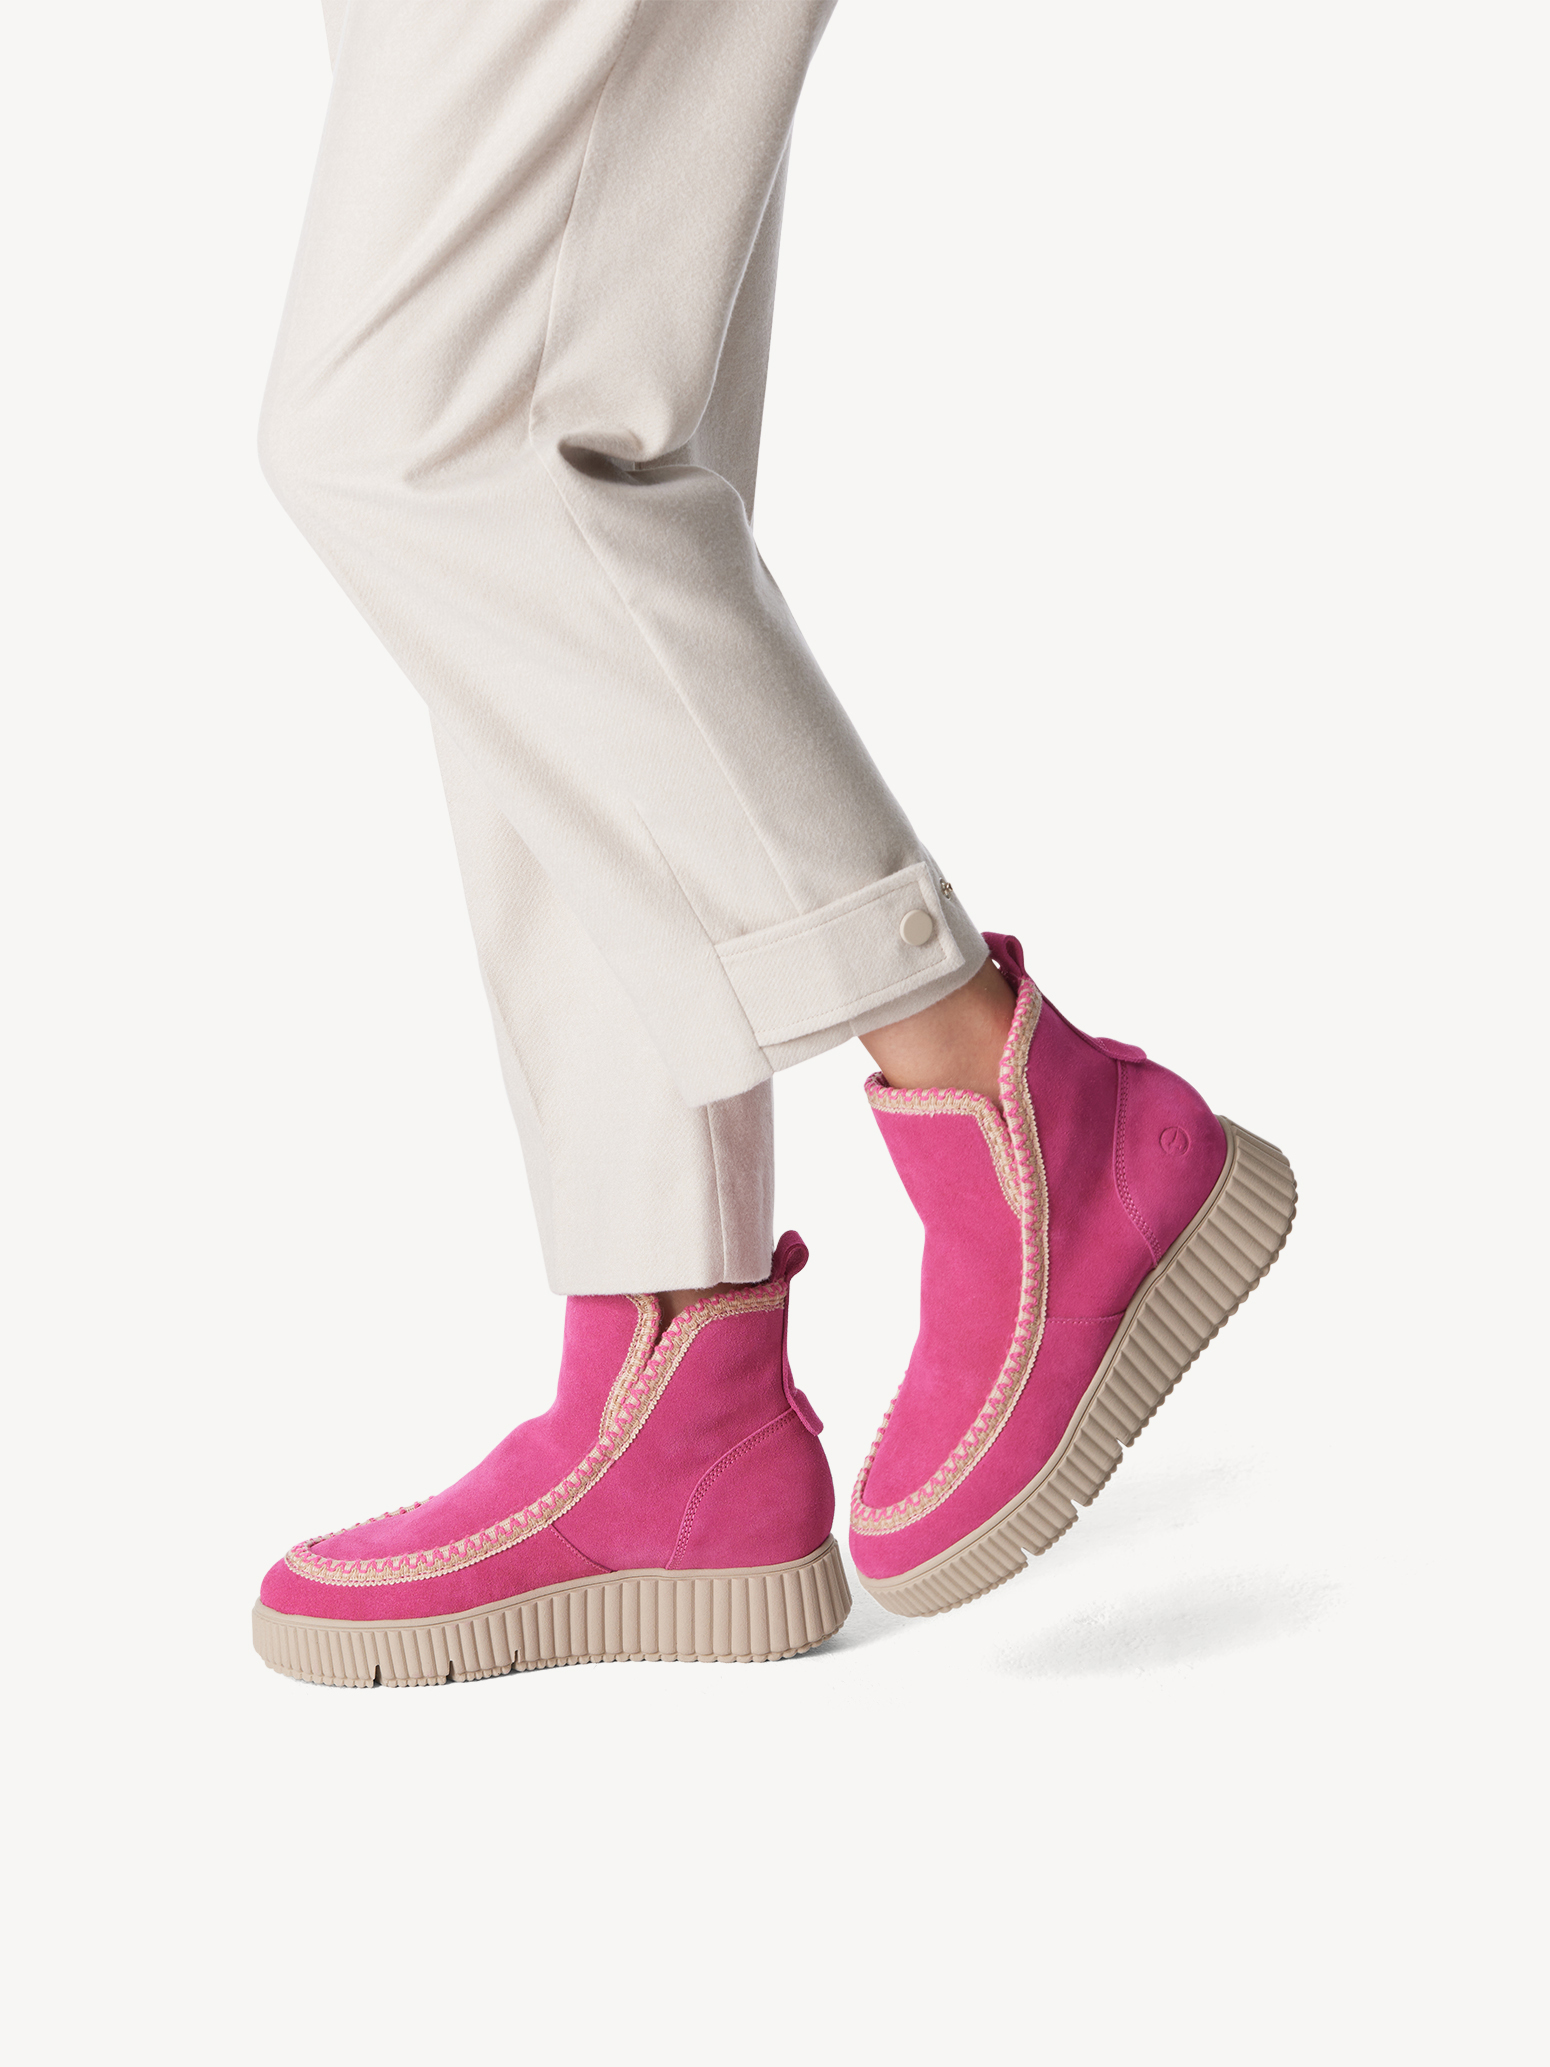 Lederstiefelette - pink Warmfutter 1-26865-41-513: kaufen! Stiefeletten Tamaris & online Boots